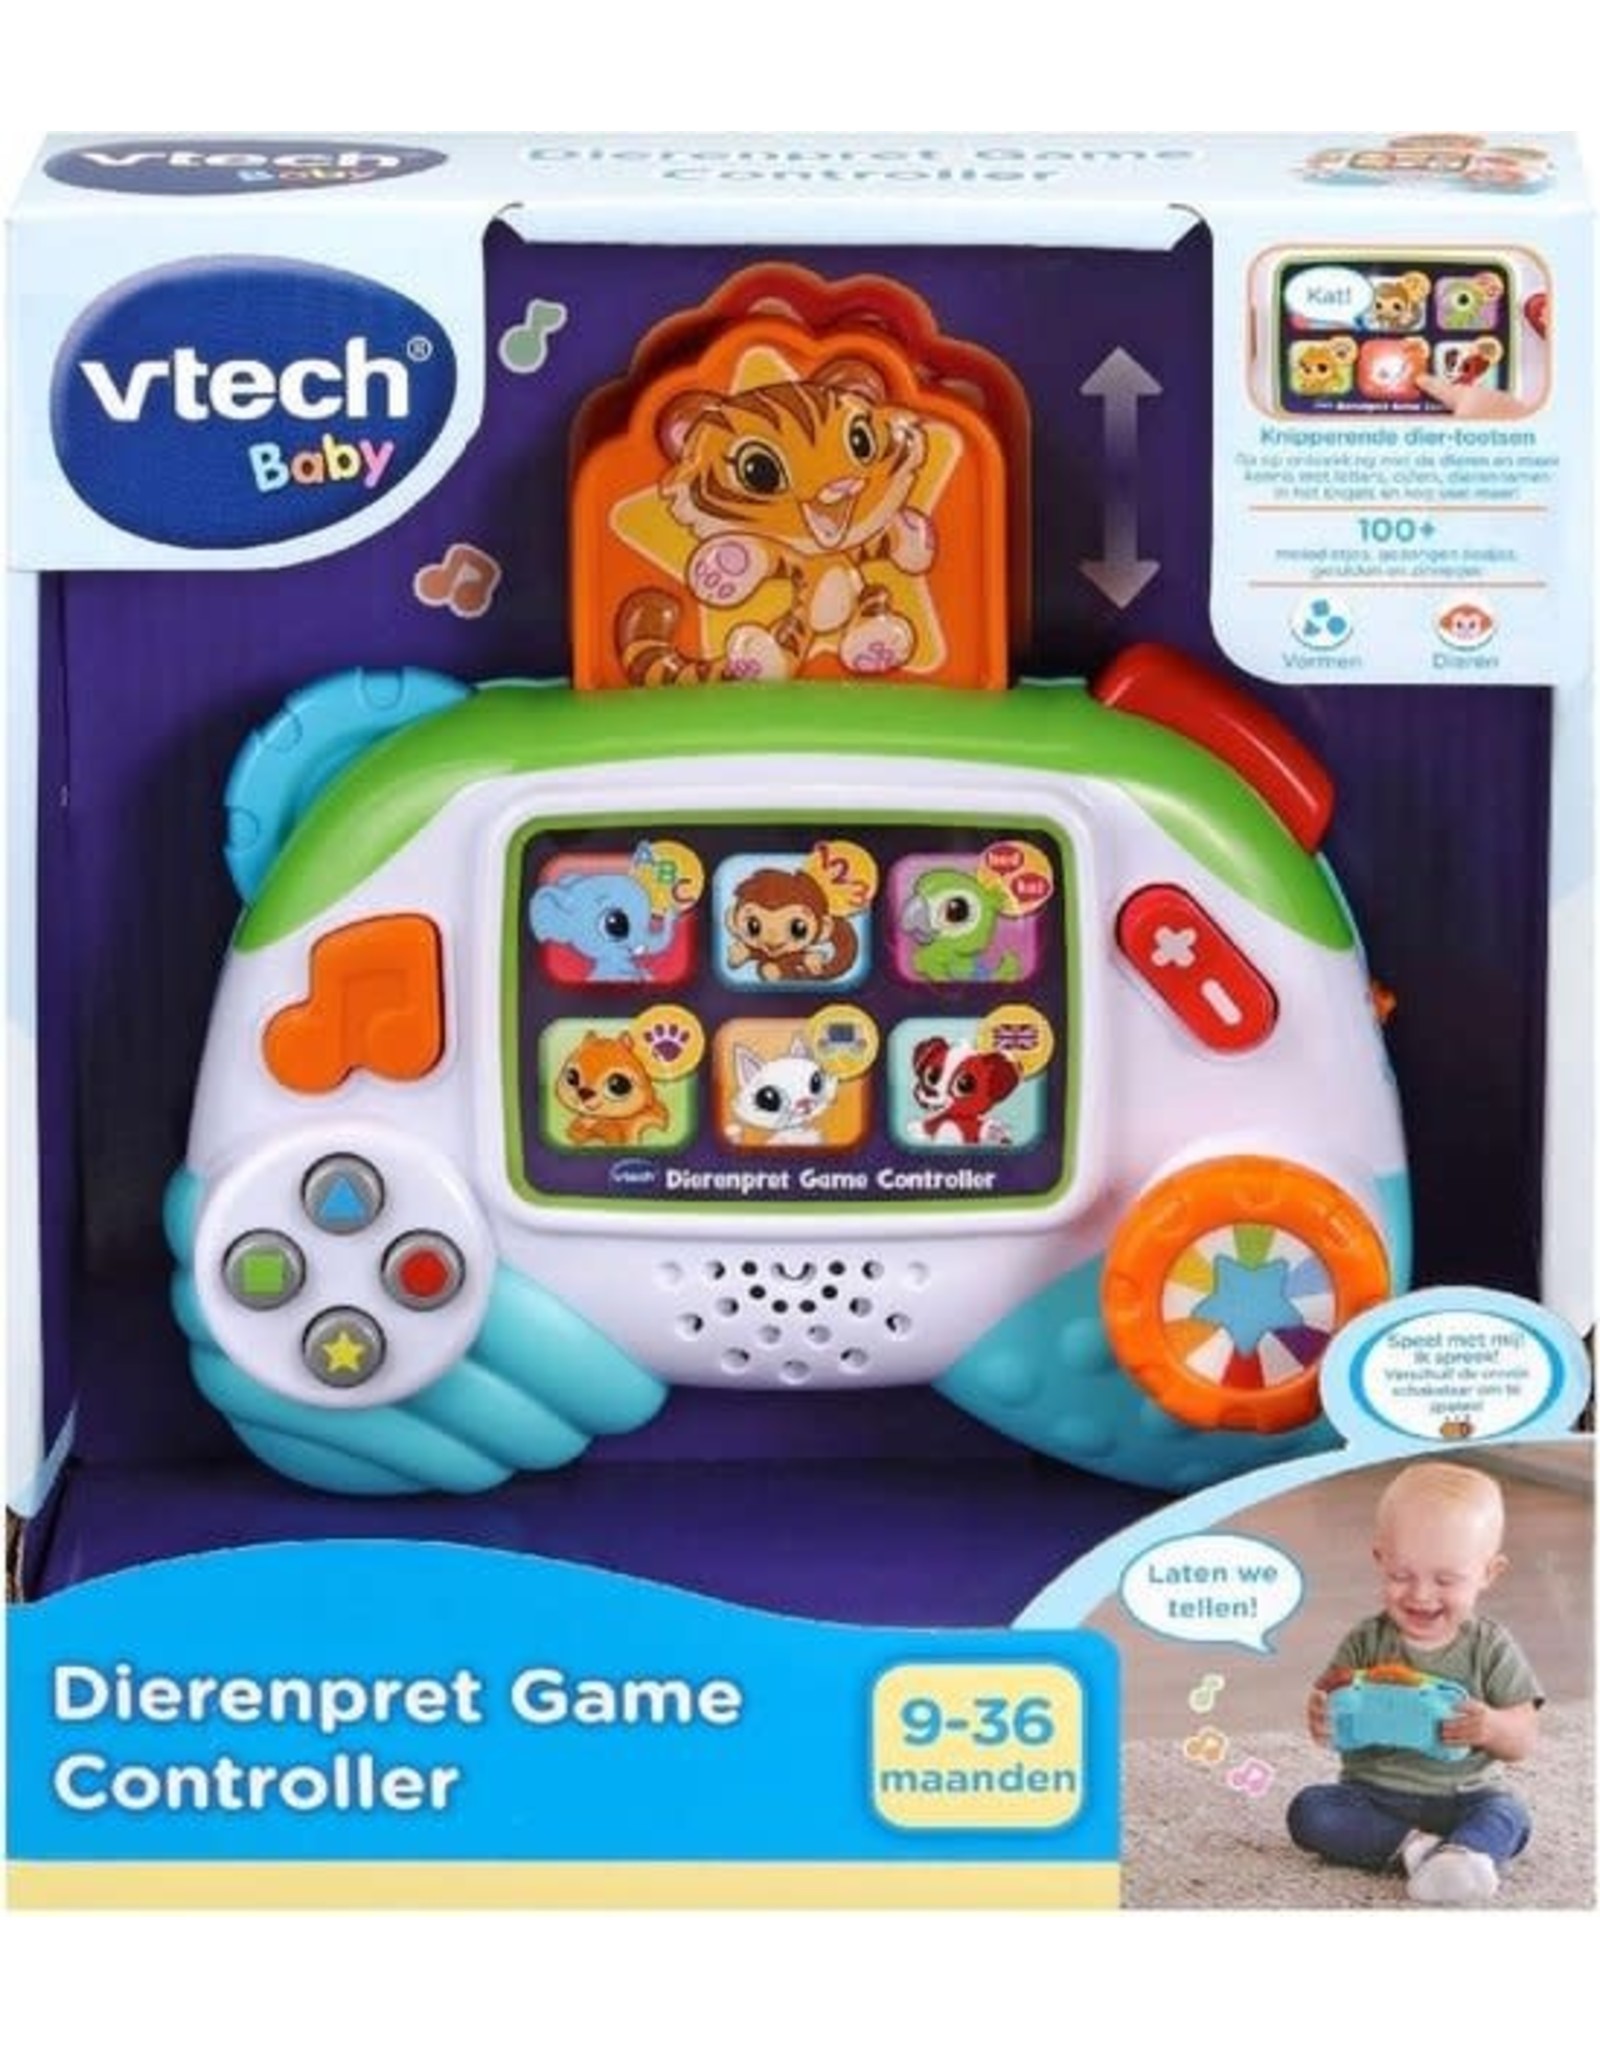 VTECH VTech Baby Dierenpret Game Controller